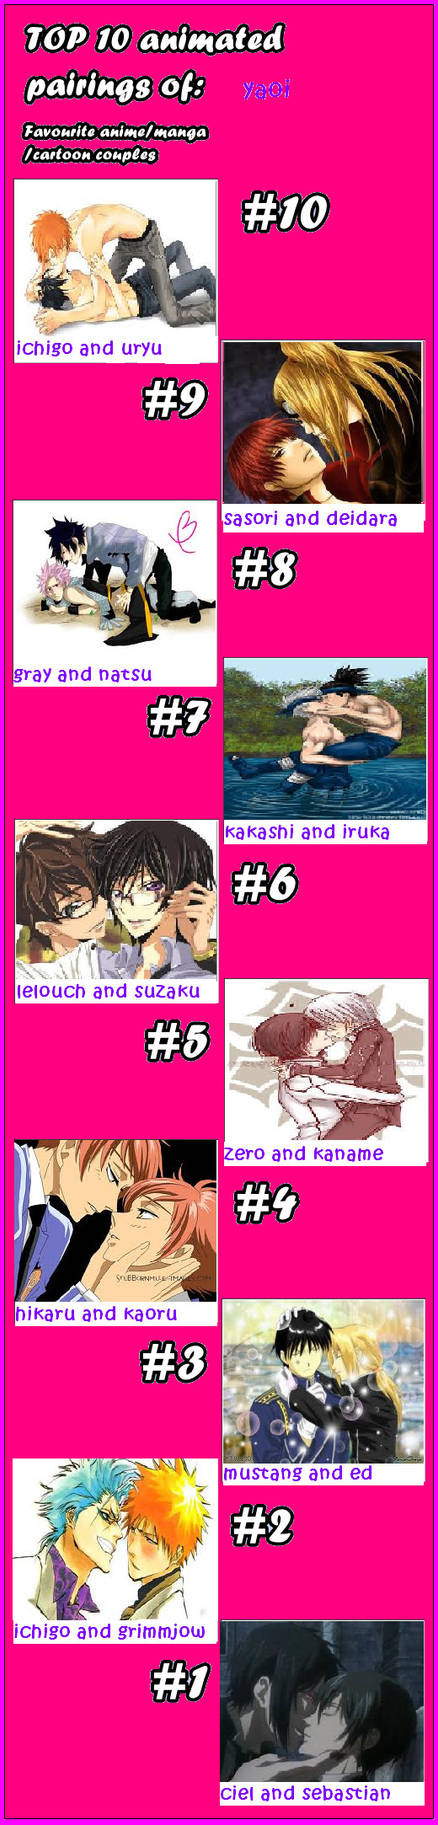 Mi top 10 de parejas yaoi asdasdsad by laezg on DeviantArt